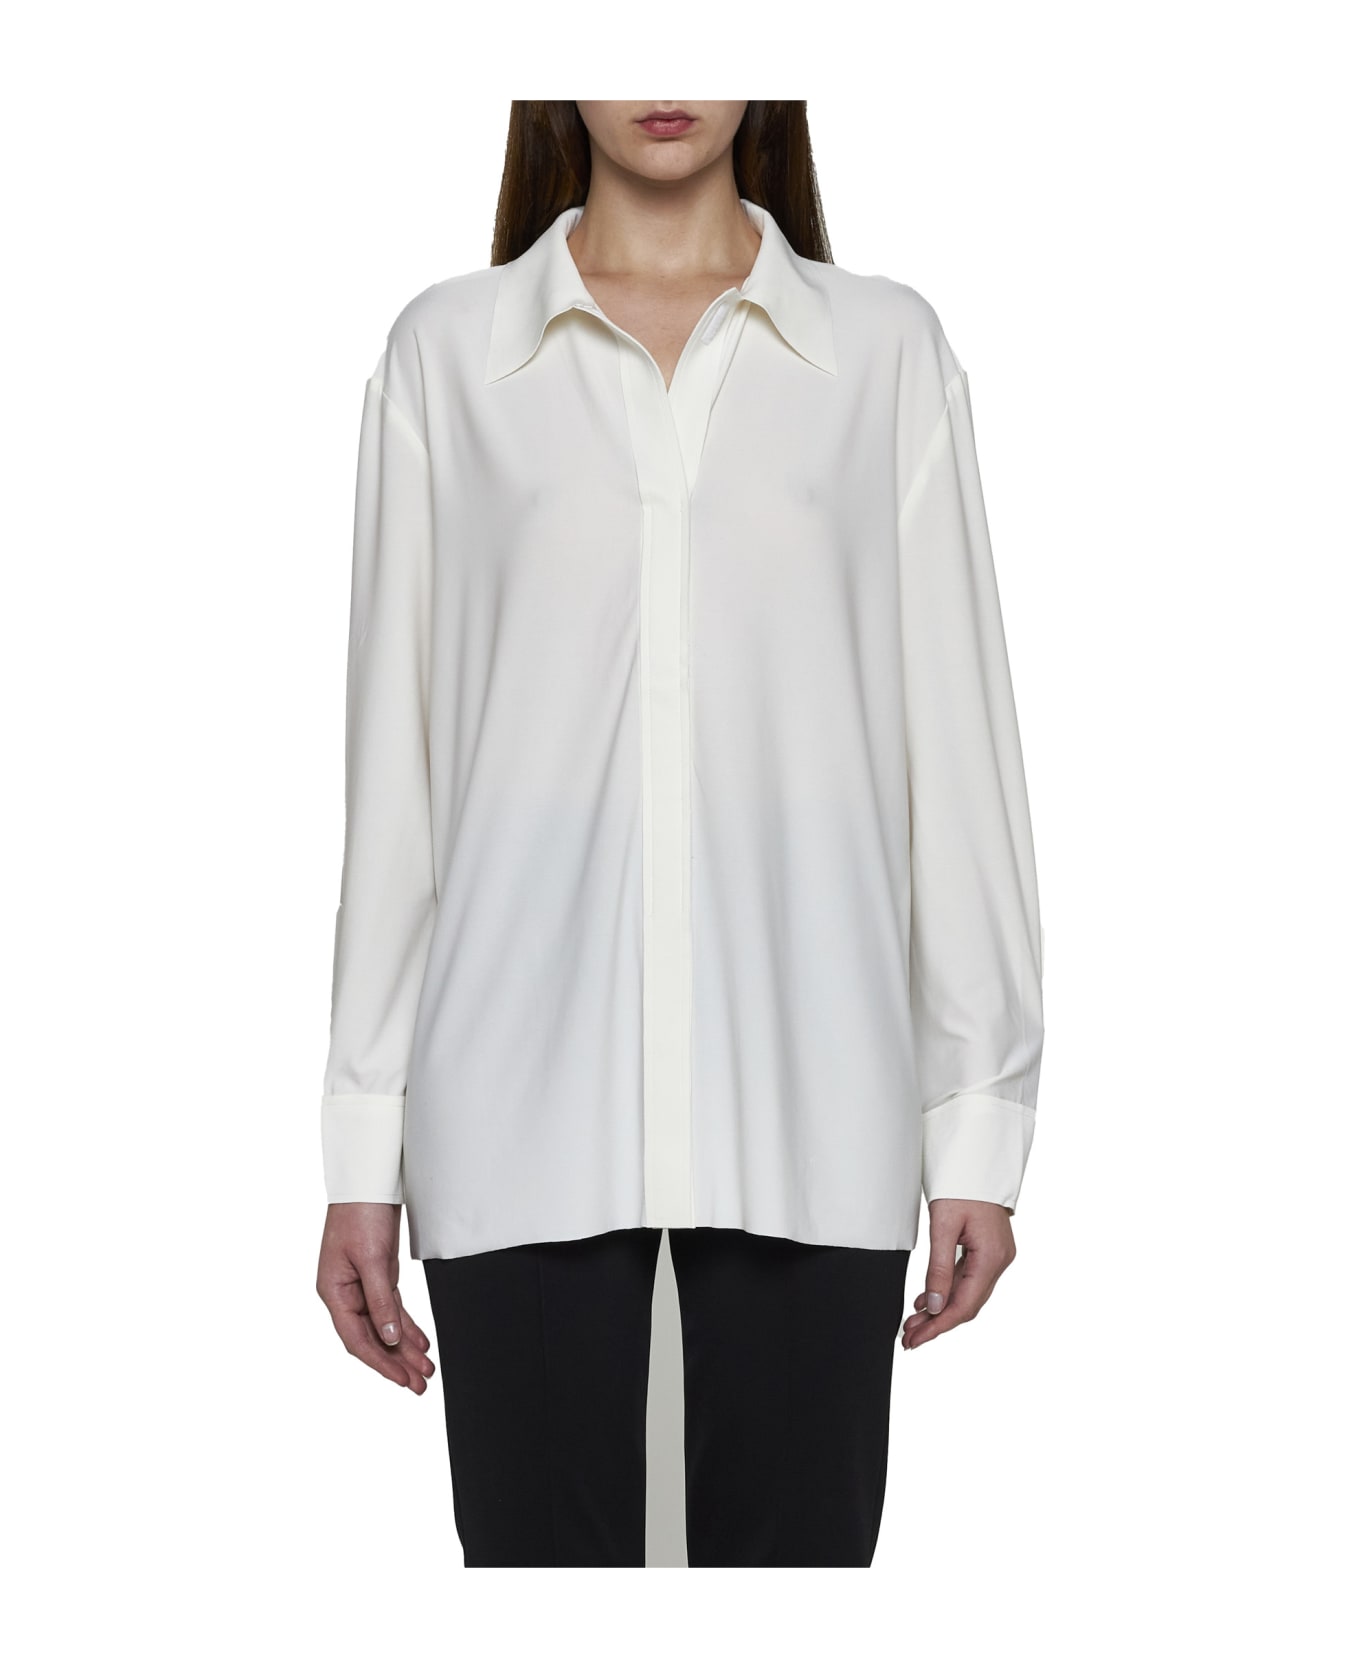 Norma Kamali Shirt - White シャツ